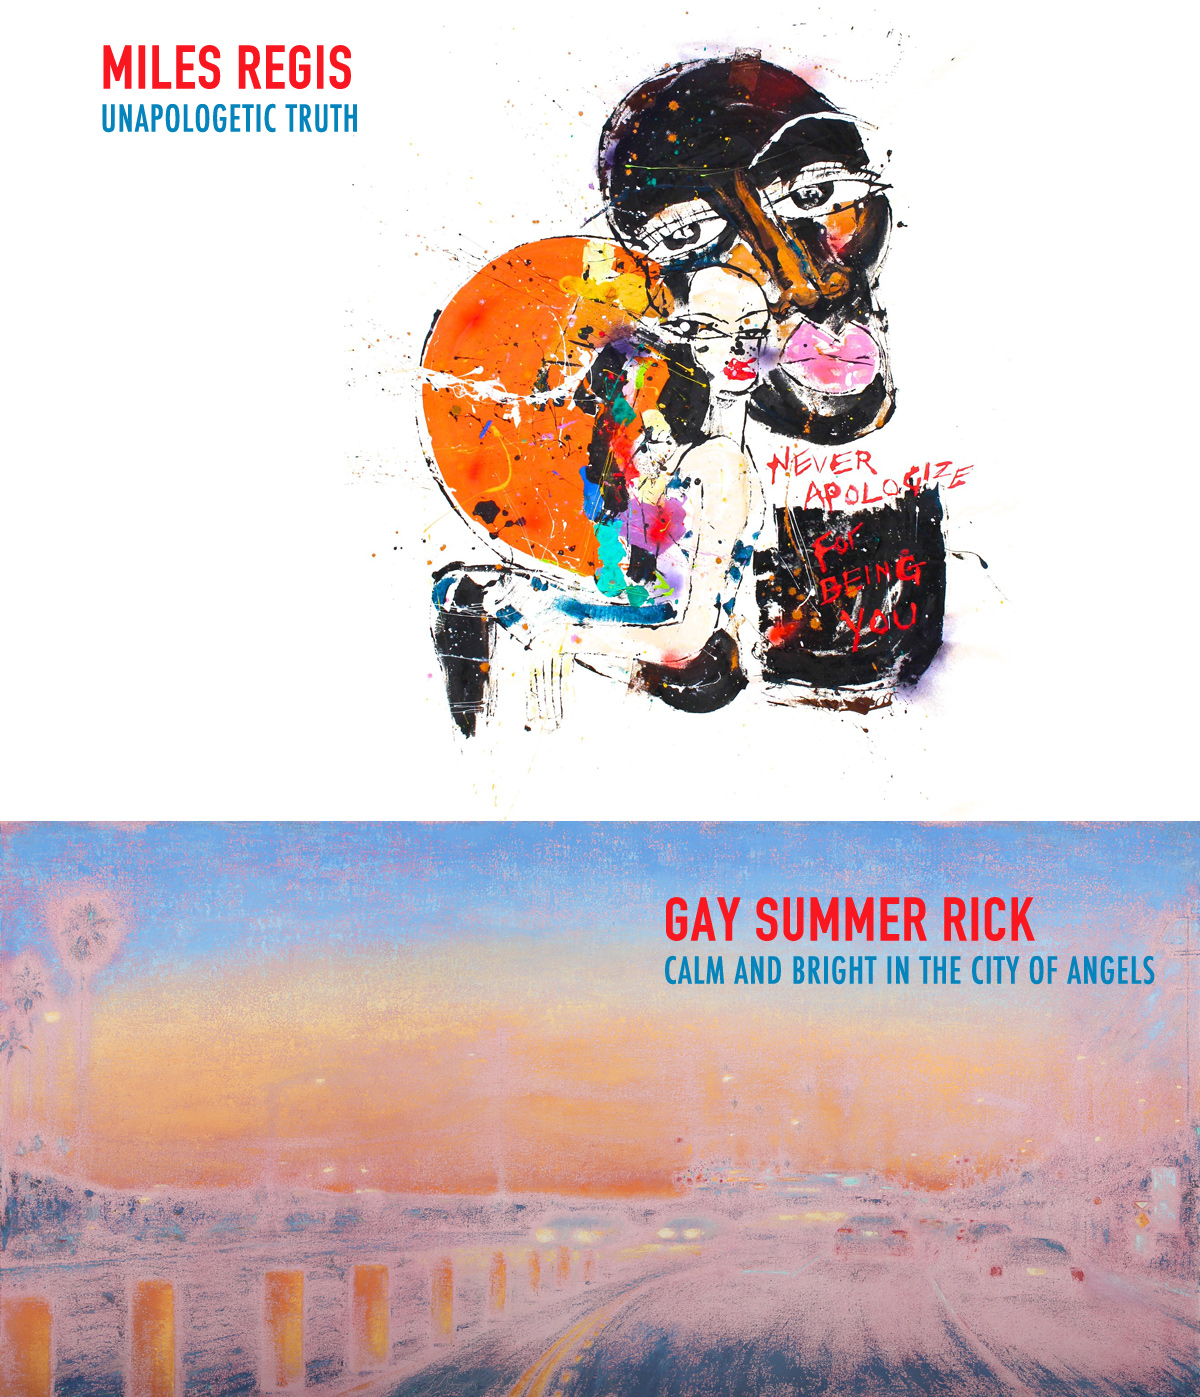 miles-regis and-gay summer rick